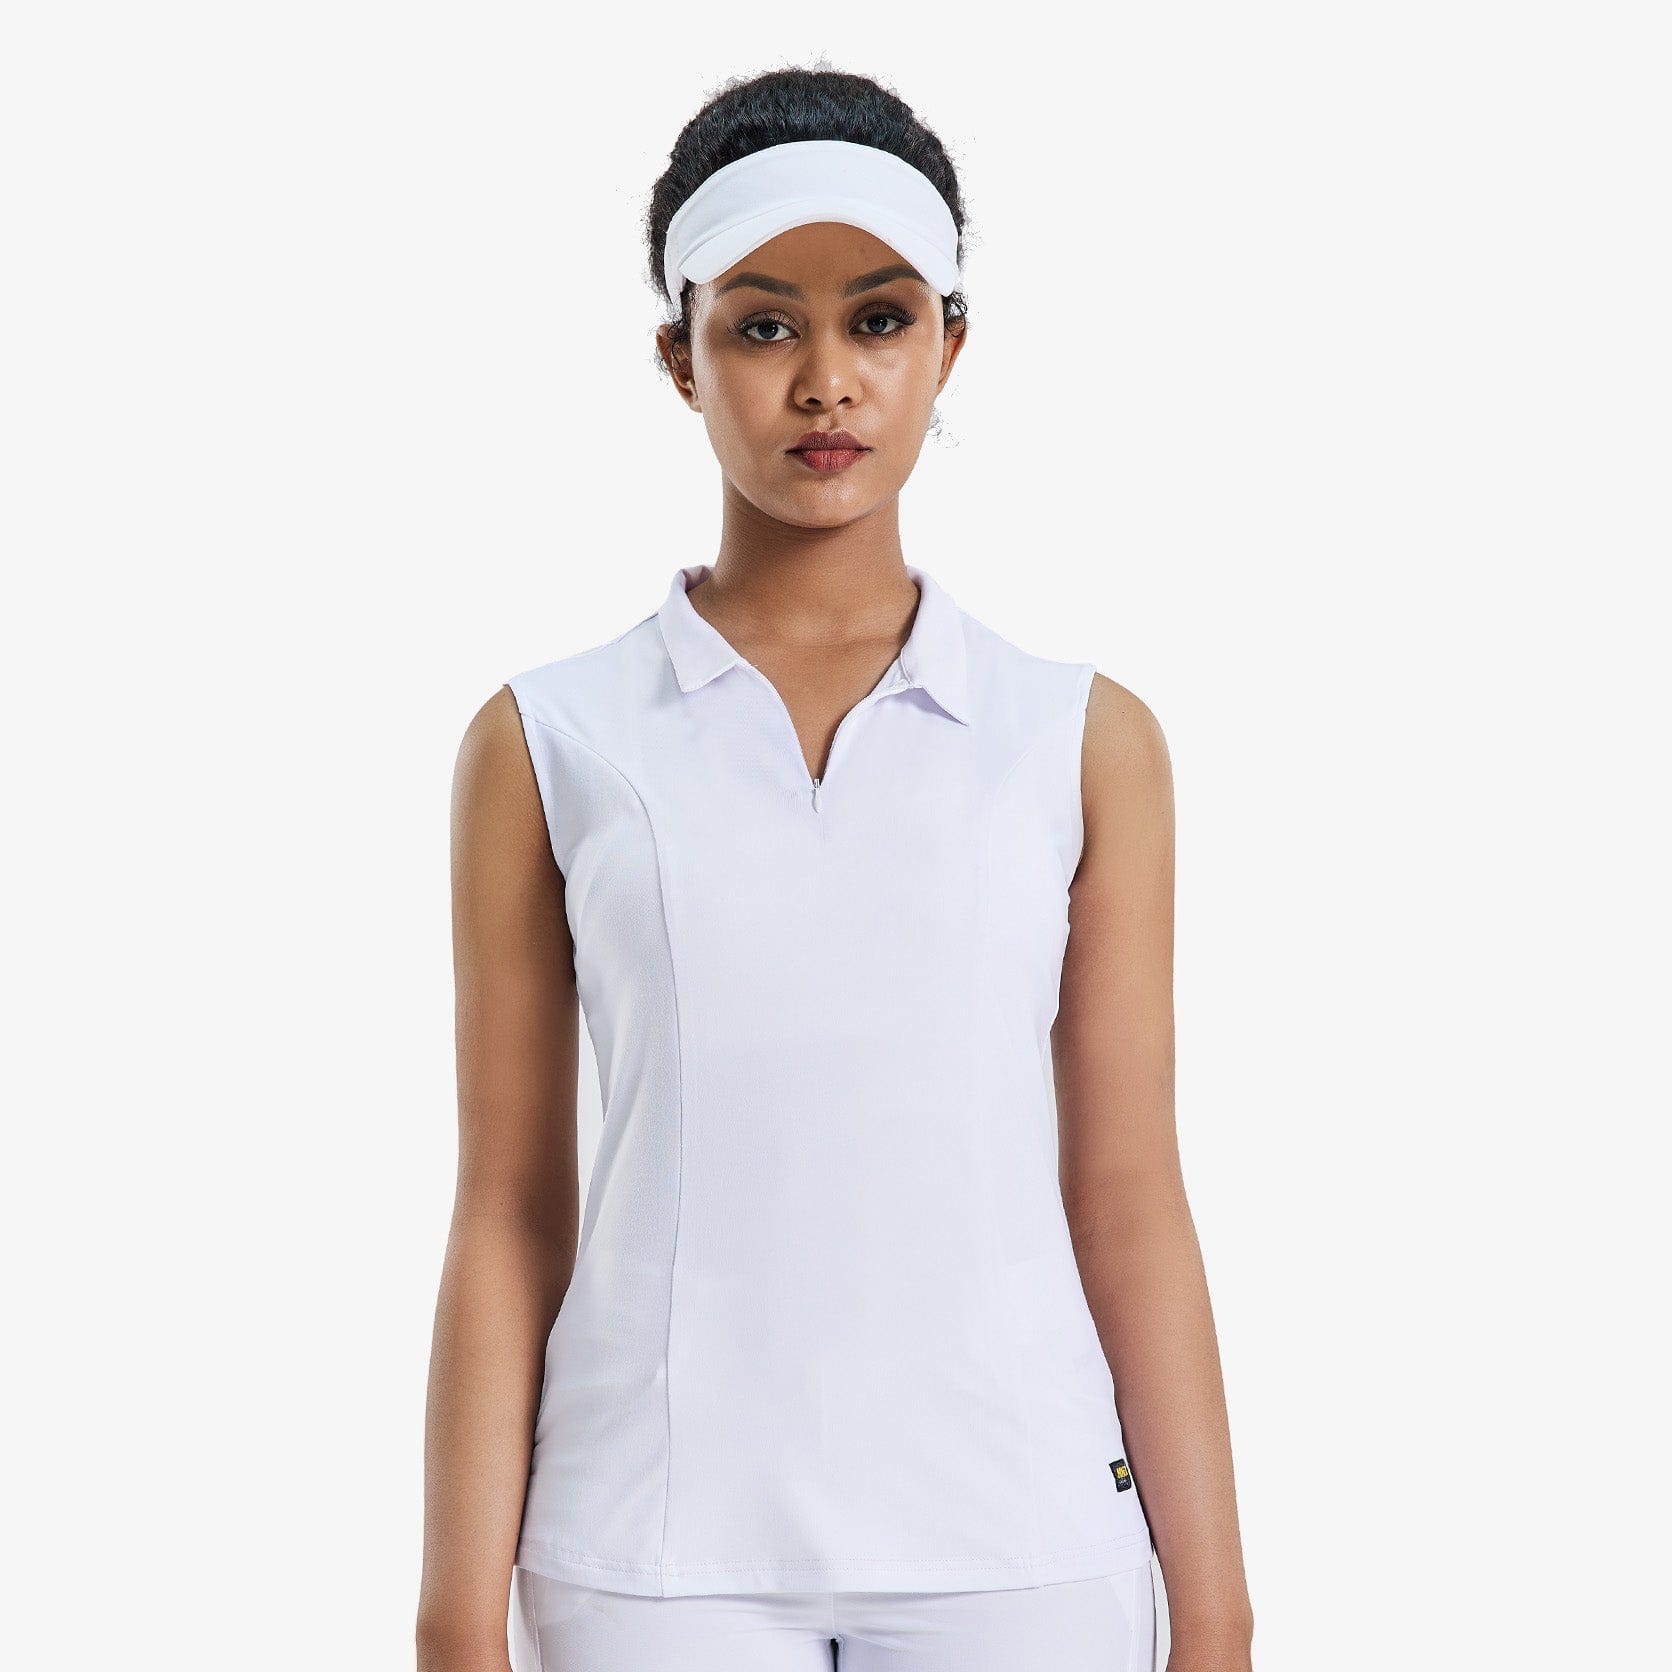 Women's Golf Polo Shirts Sleeveless V Neck Tennis Shirt - White / XS